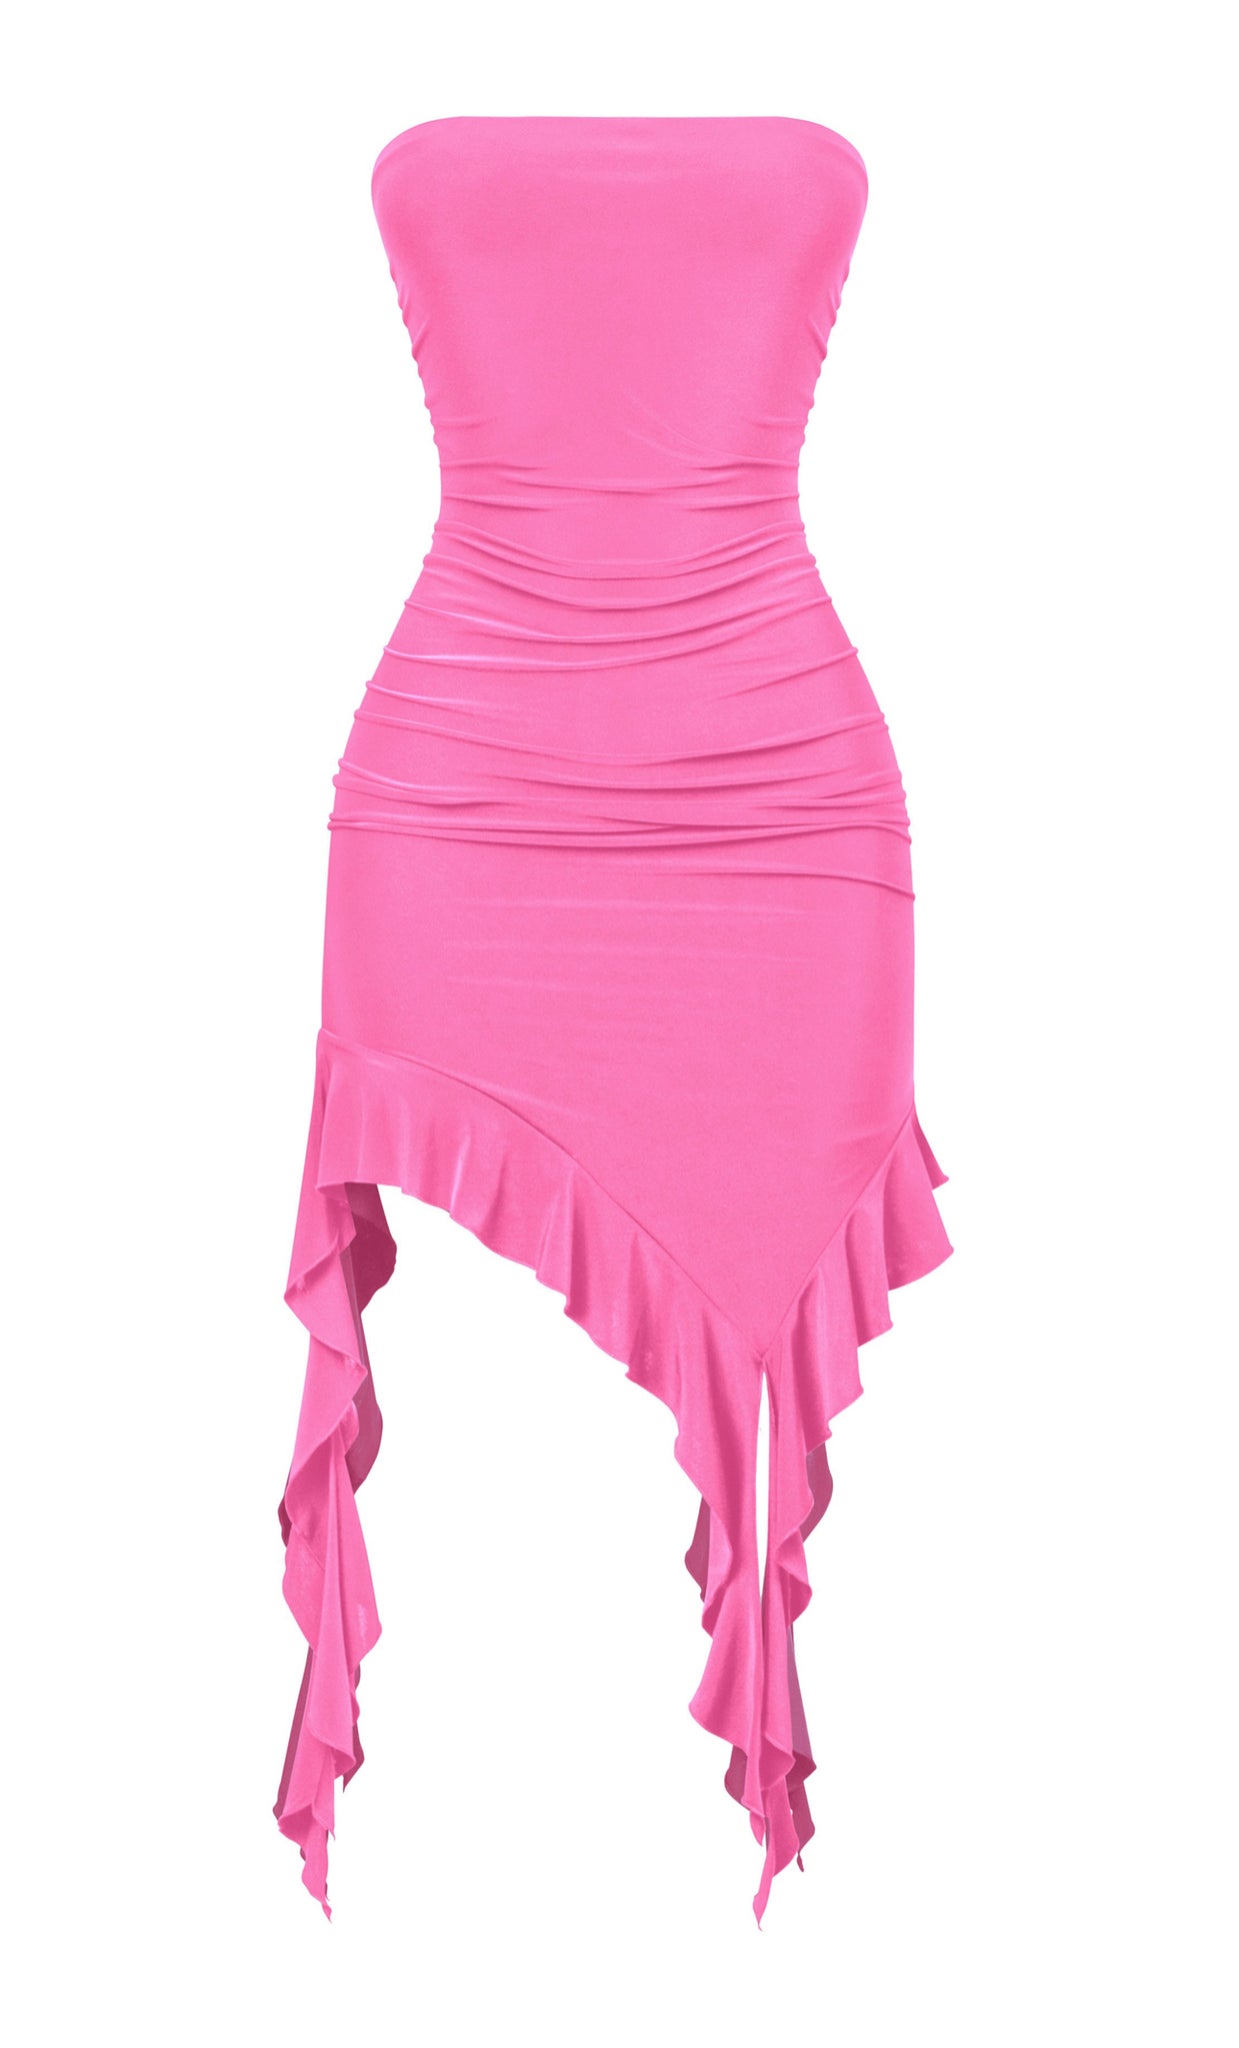 Naylea Ruffled Asymmetrical Dress (Pink)